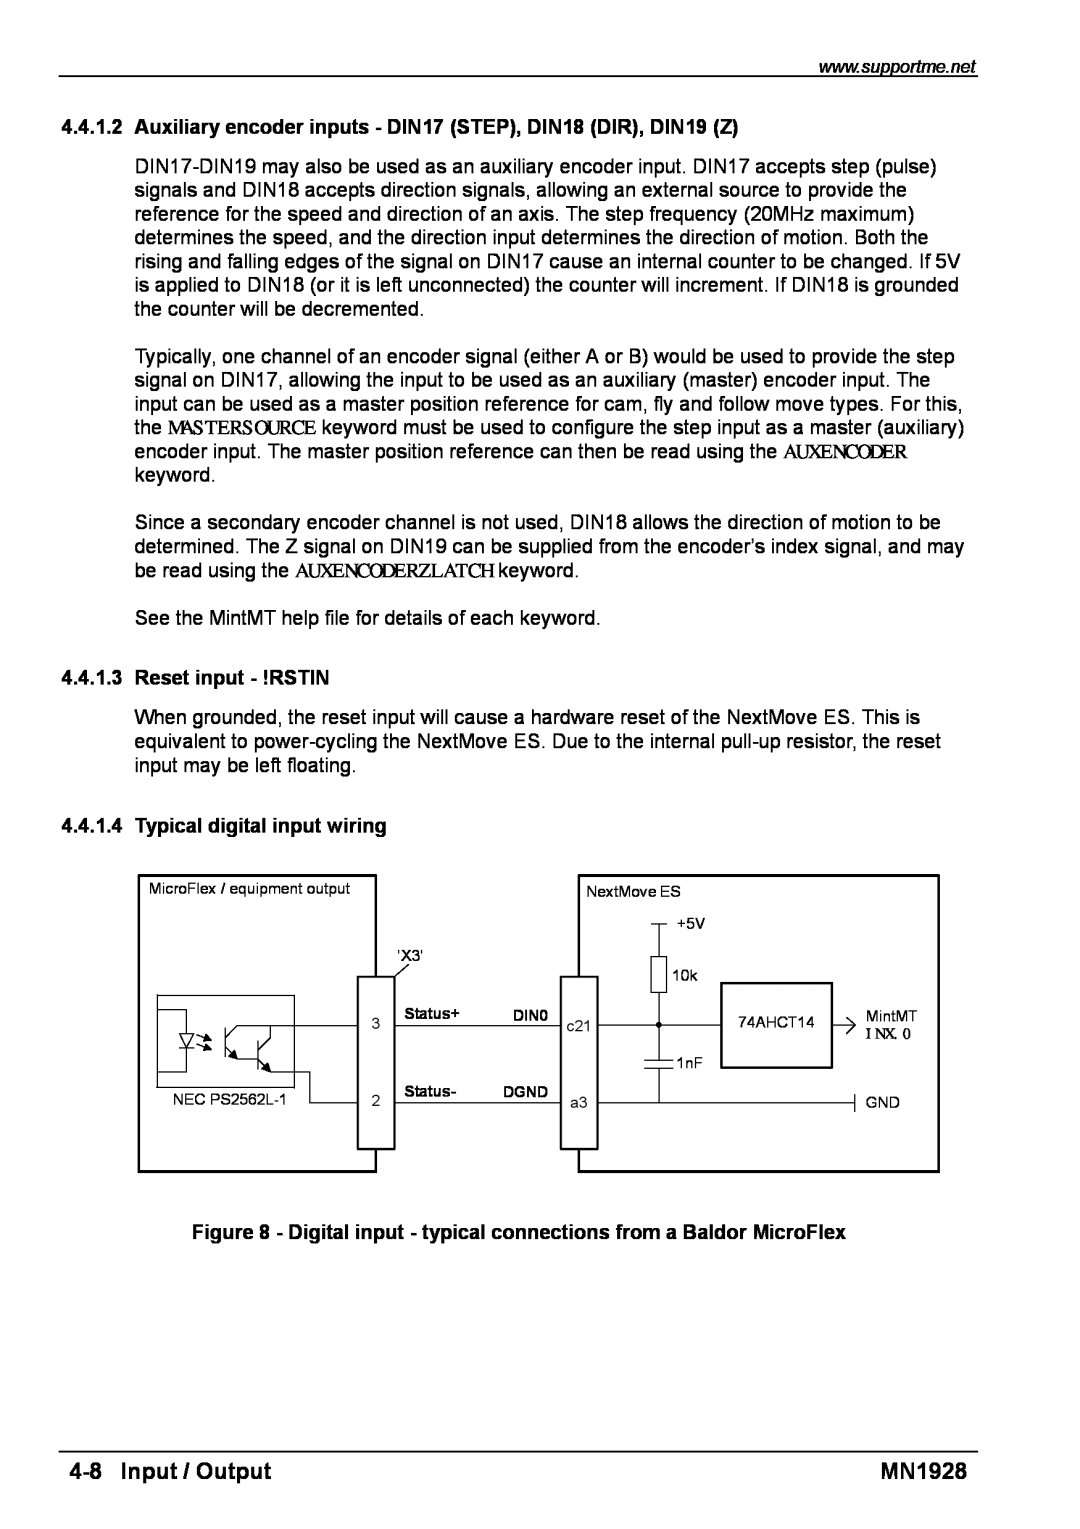 Baldor MN1928 Input / Output, Auxiliary encoder inputs - DIN17 STEP, DIN18 DIR, DIN19 Z, Reset input - !RSTIN 